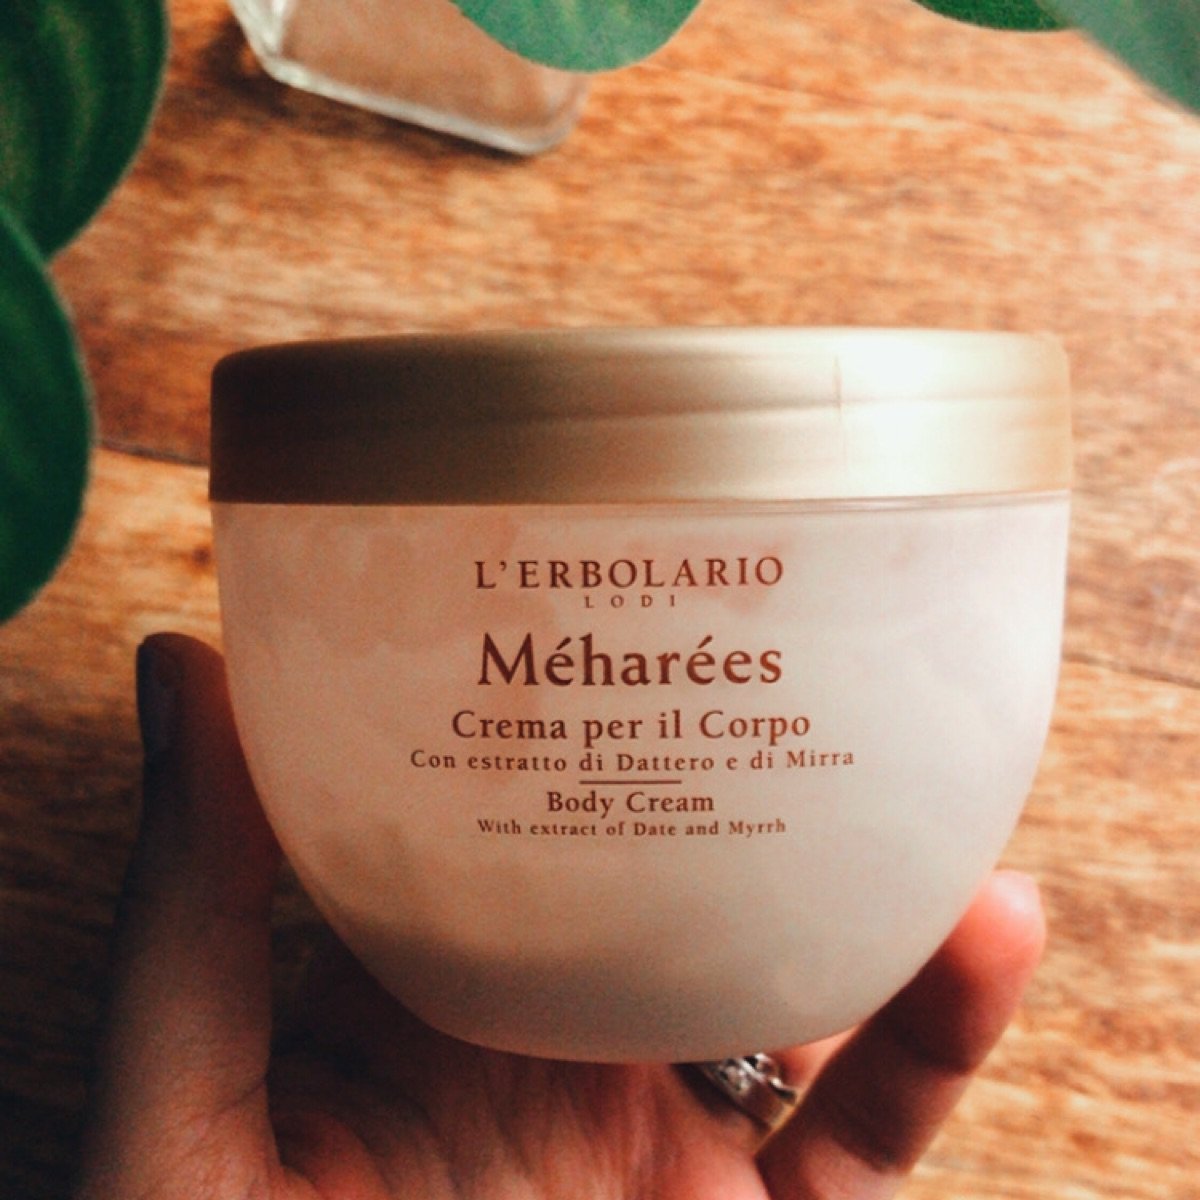 L'Erbolario Crema corpo Meharees Reviews | abillion